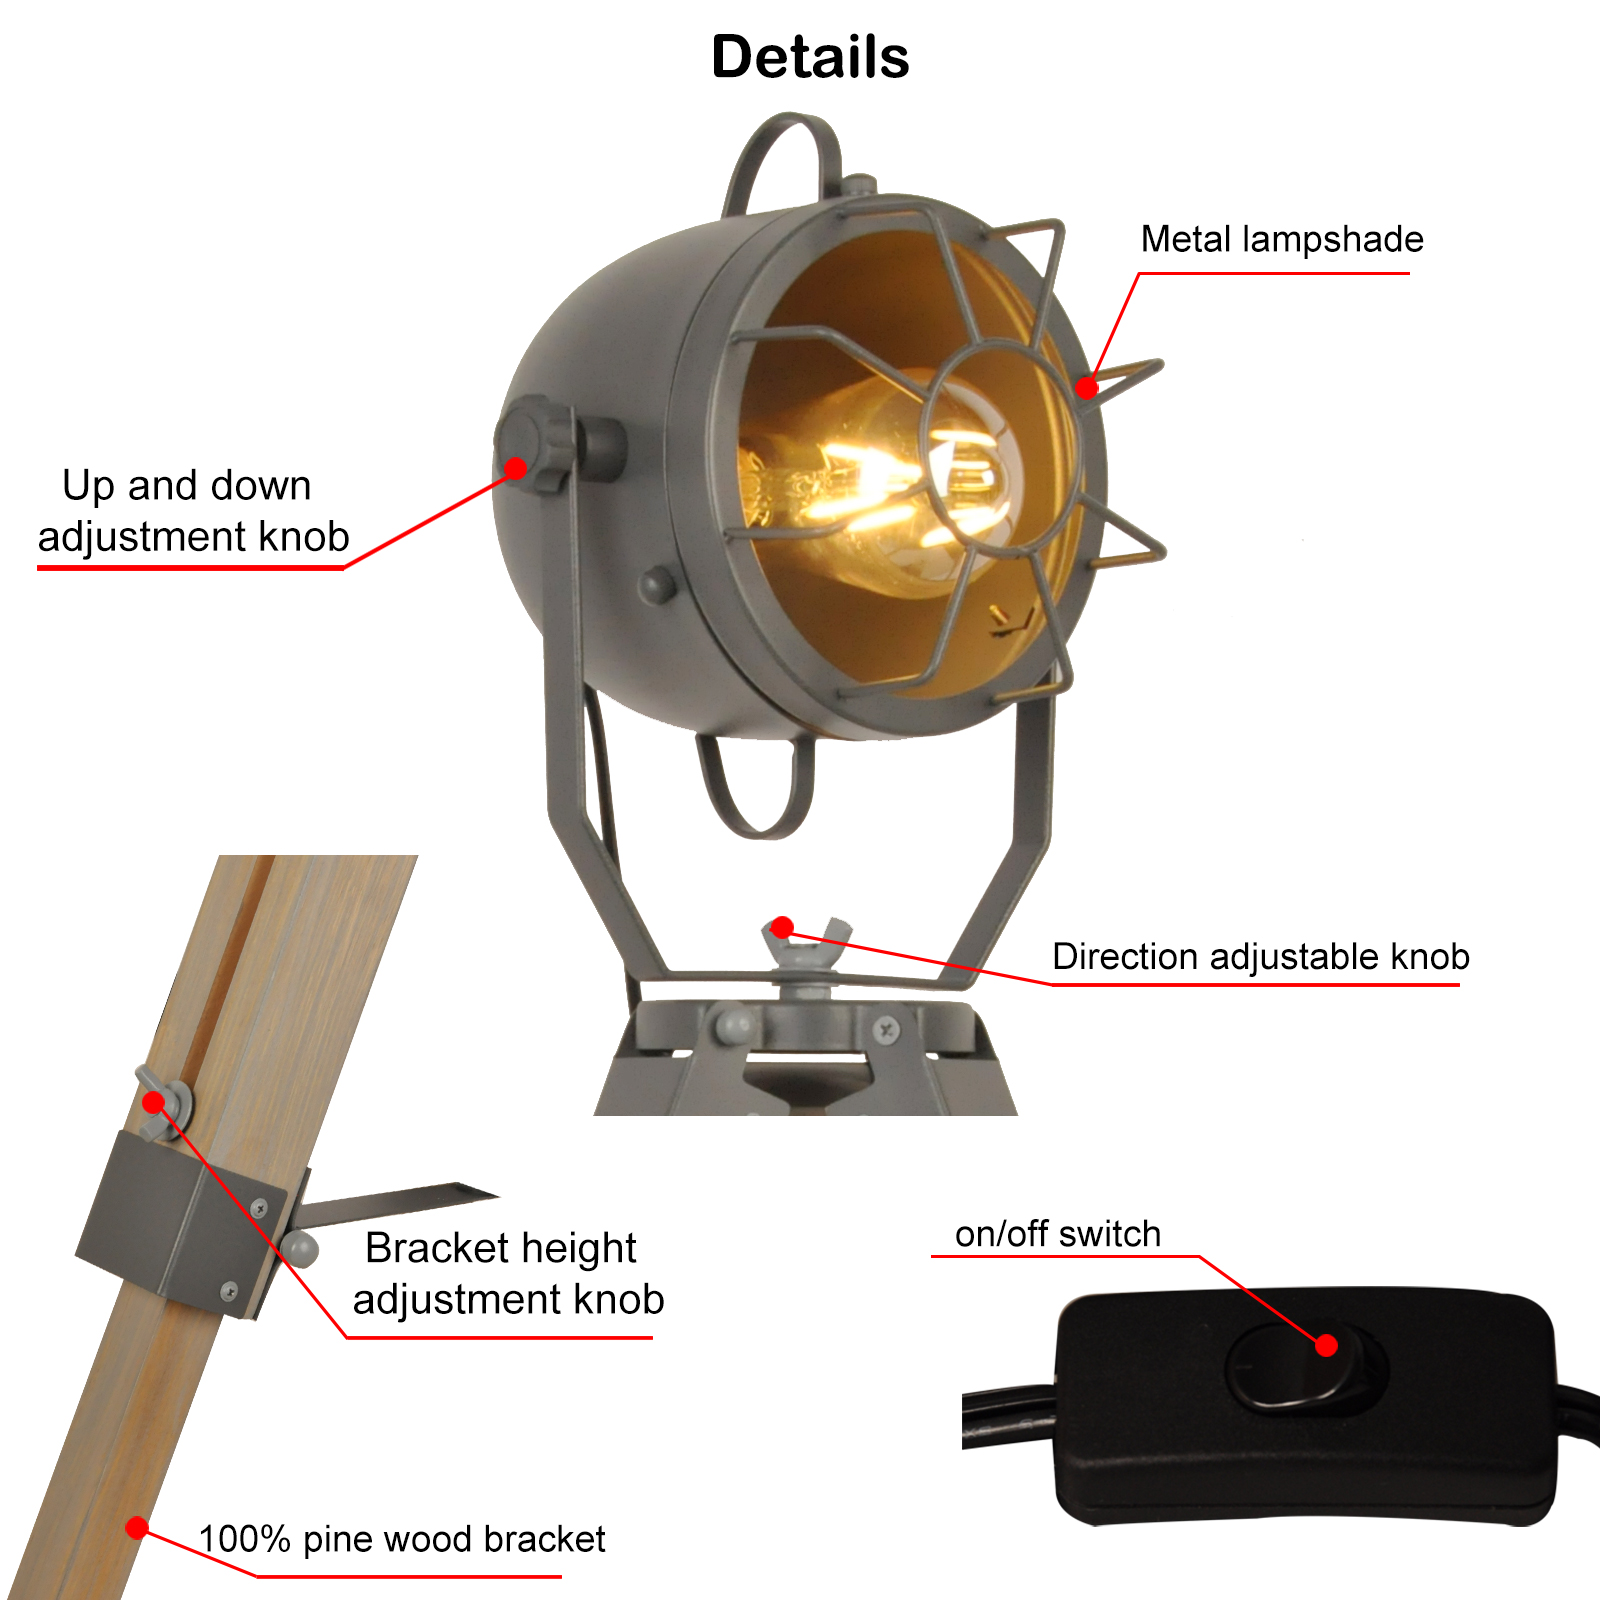 componentes de la lampara tripode